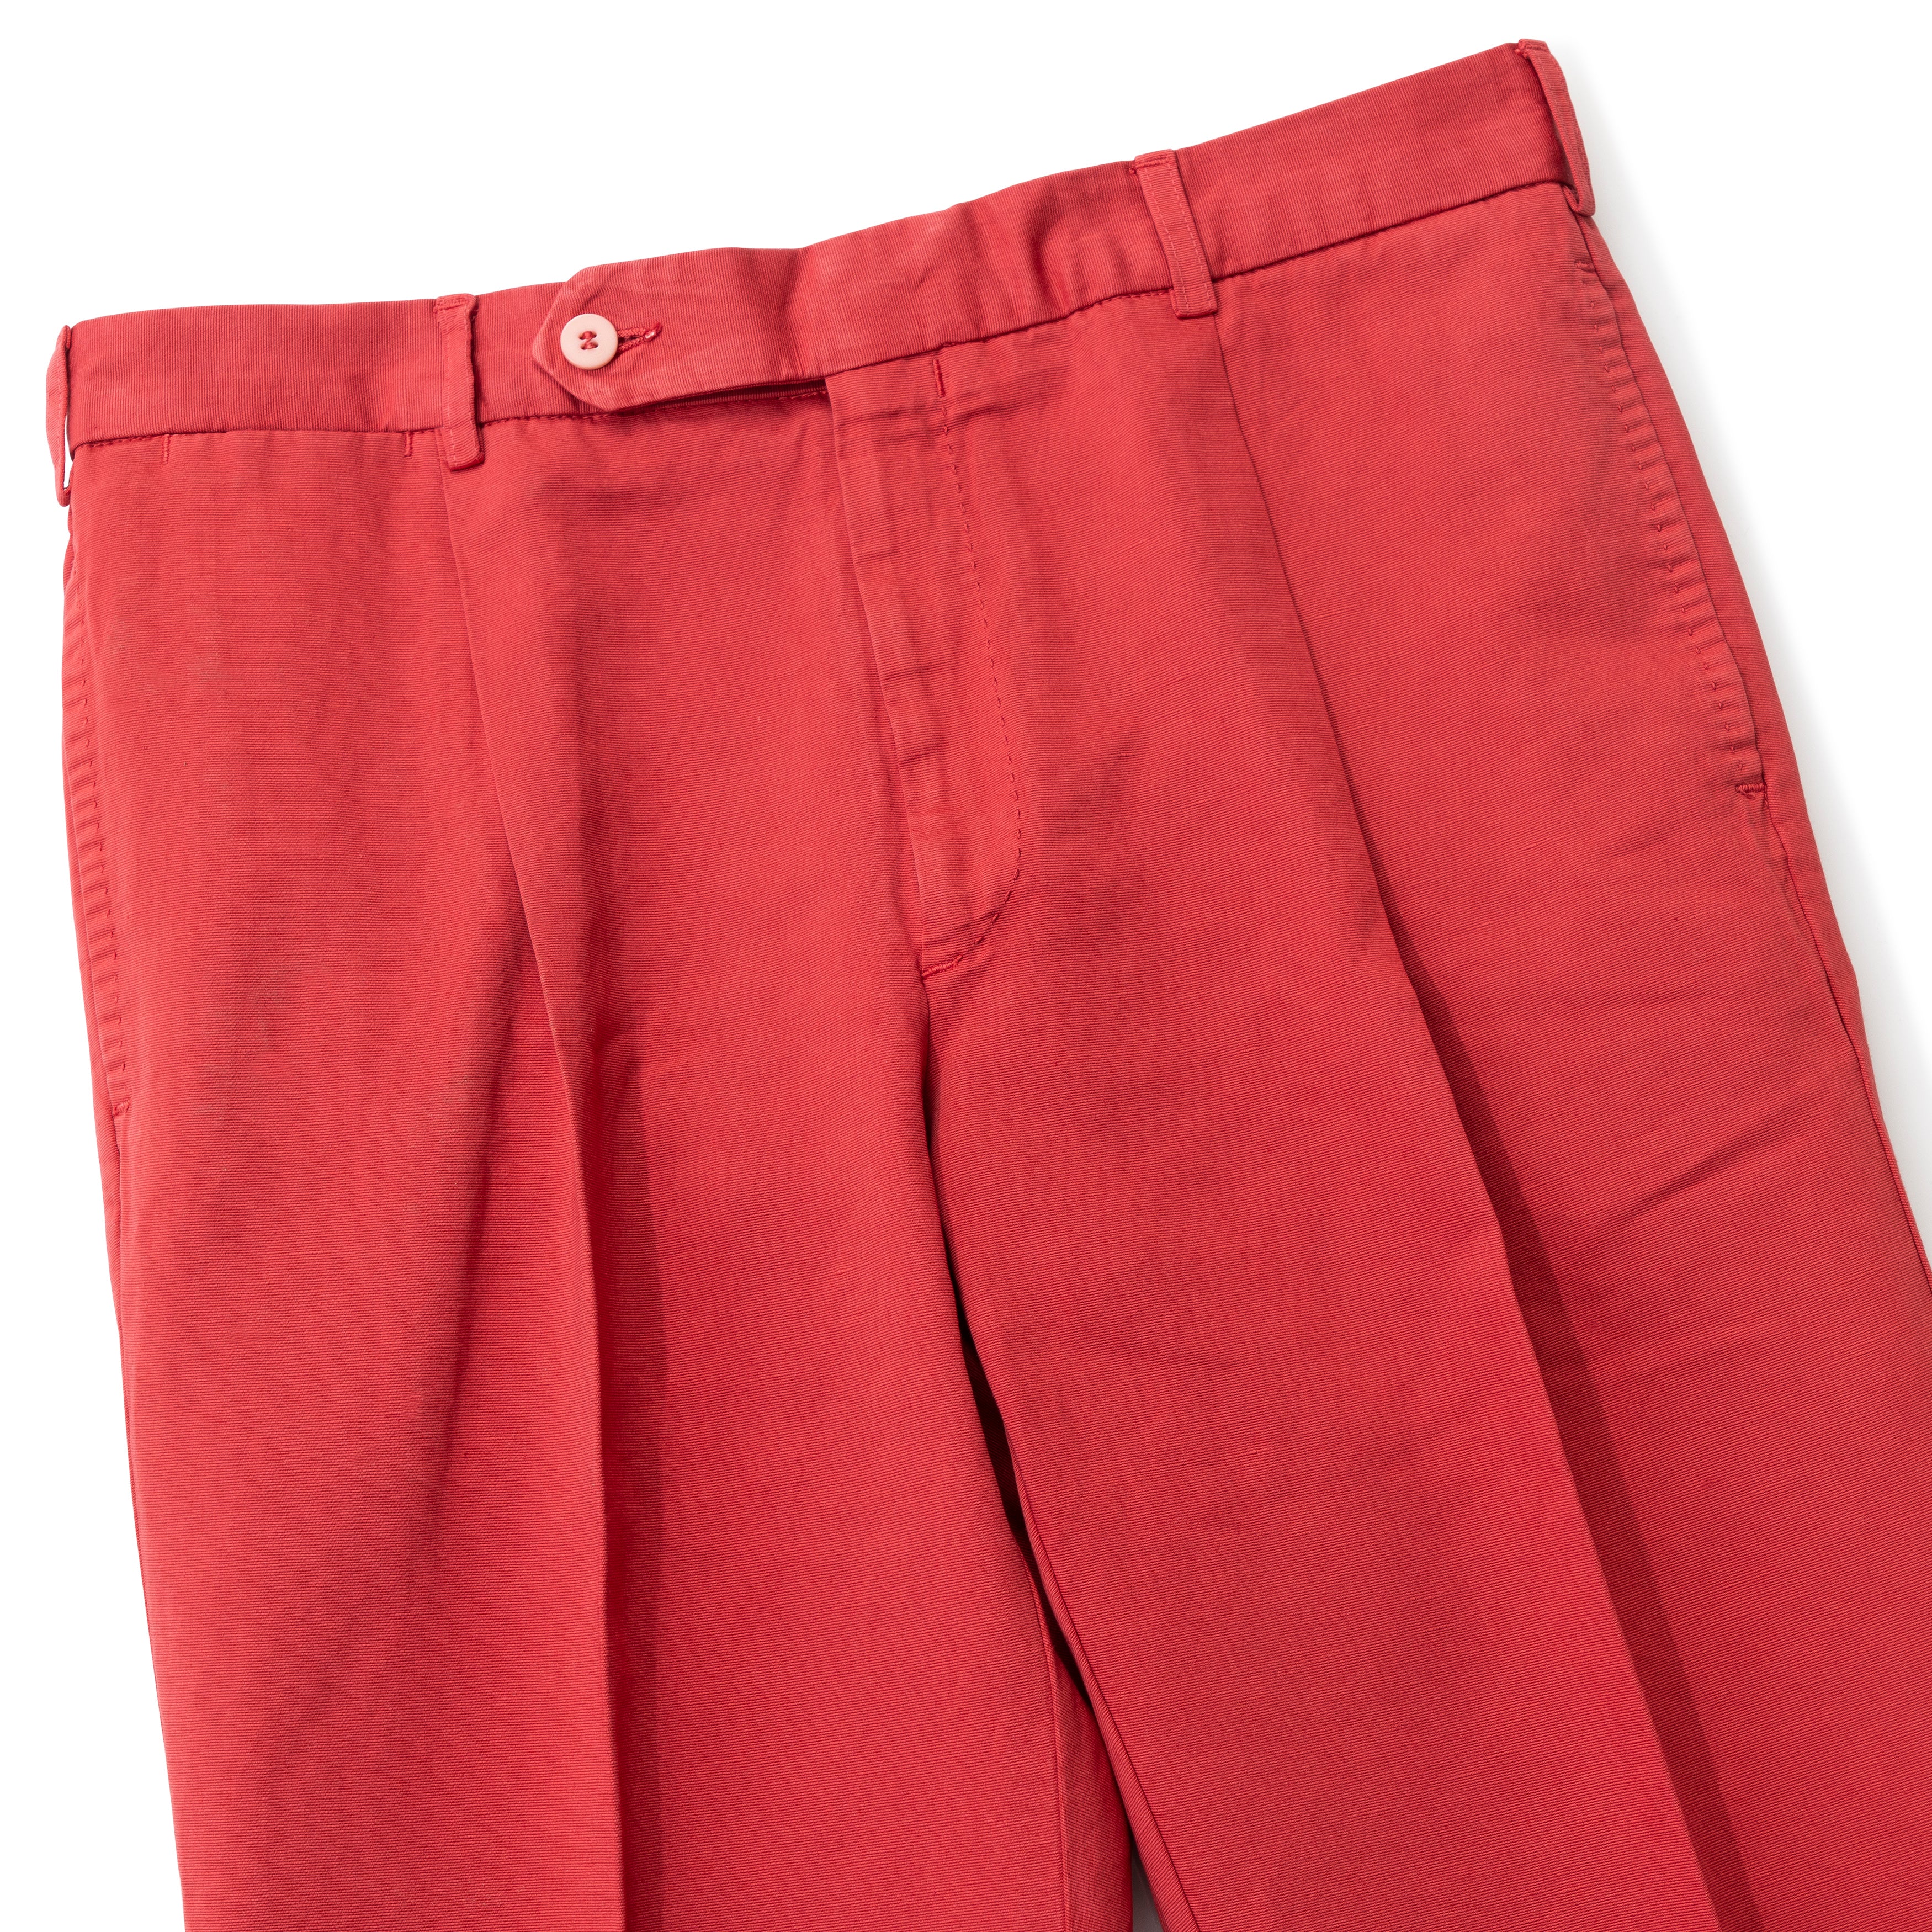 Summer Break Savings,POROPL Loose Wide Leg Cotton Linen Trousers Straight  Casual Pants Dress Pants for Women Clearance Red Size 10 - Walmart.com